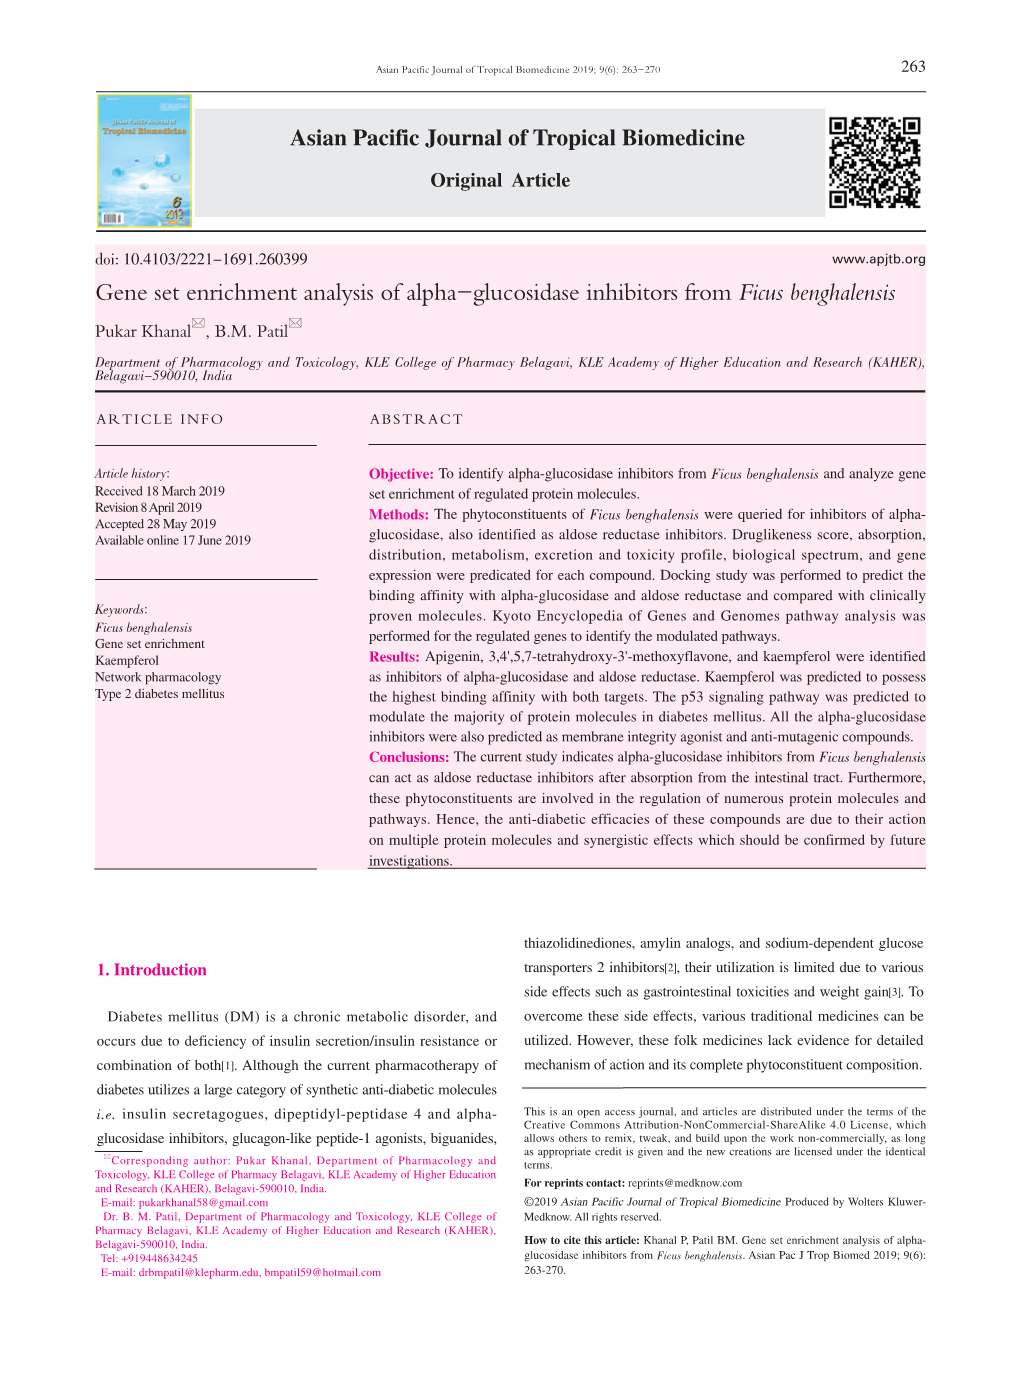 Gene Set Enrichment Analysis of Alpha-Glucosidase Inhibitors from Ficus Benghalensis Pukar Khanal, B.M